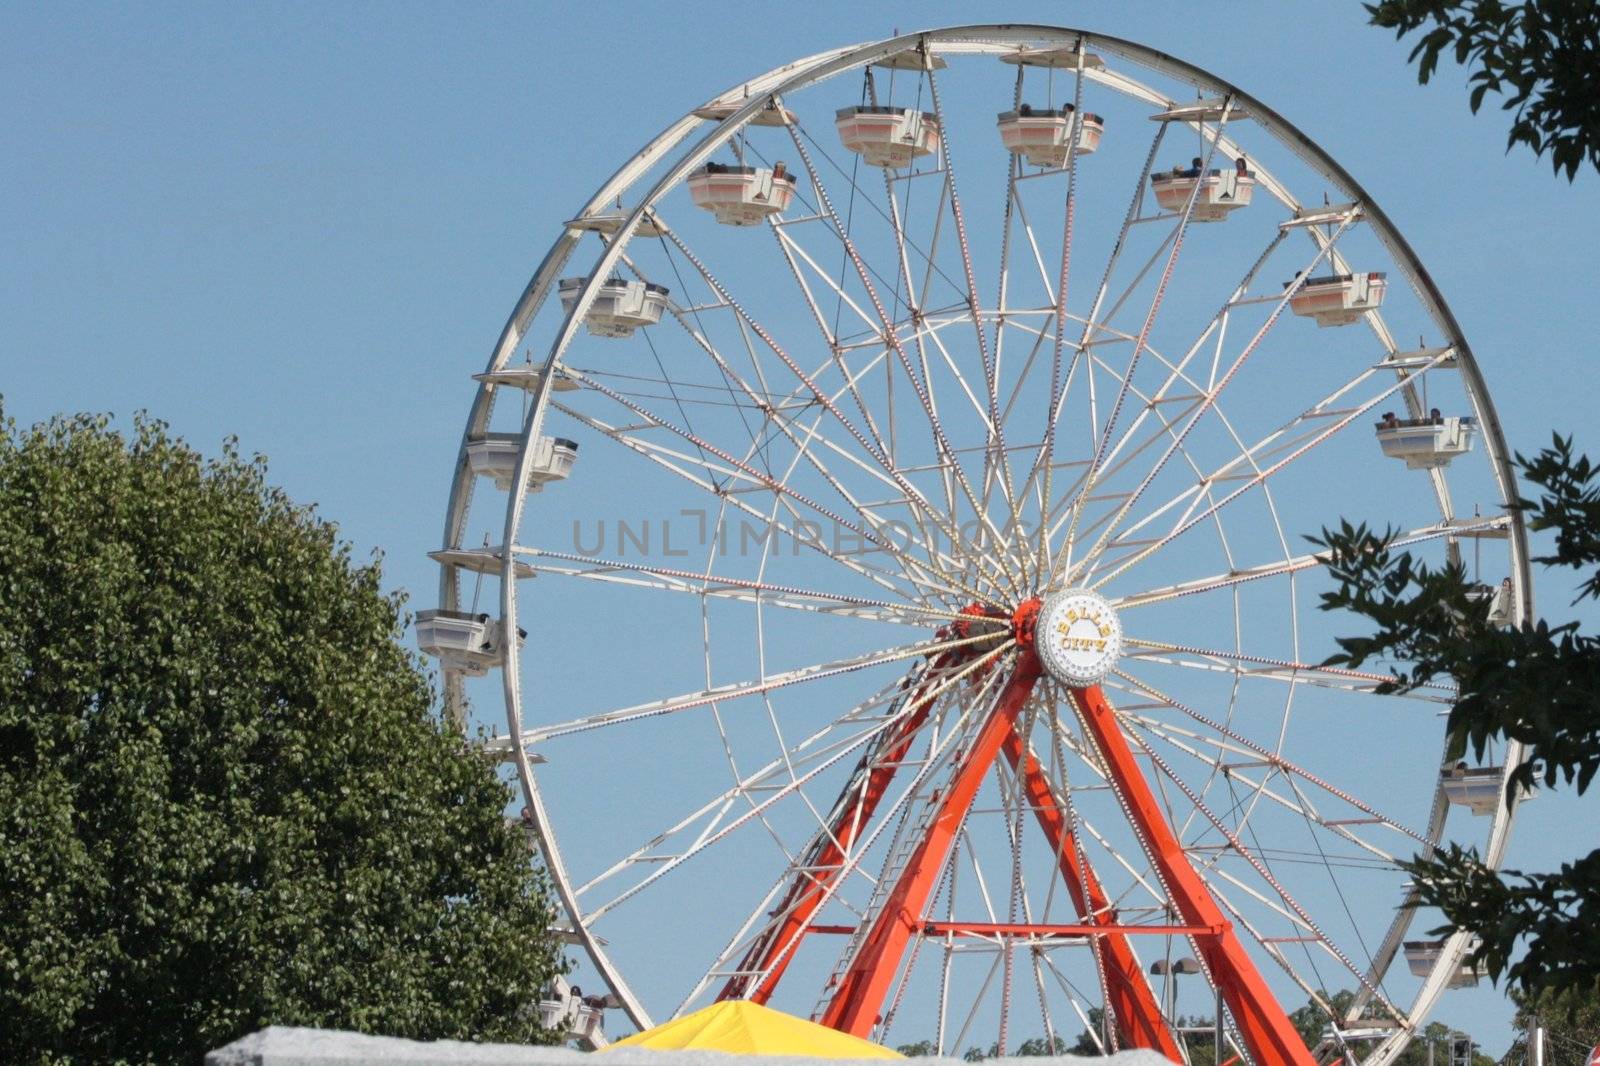 Full view of Ferris Wheel